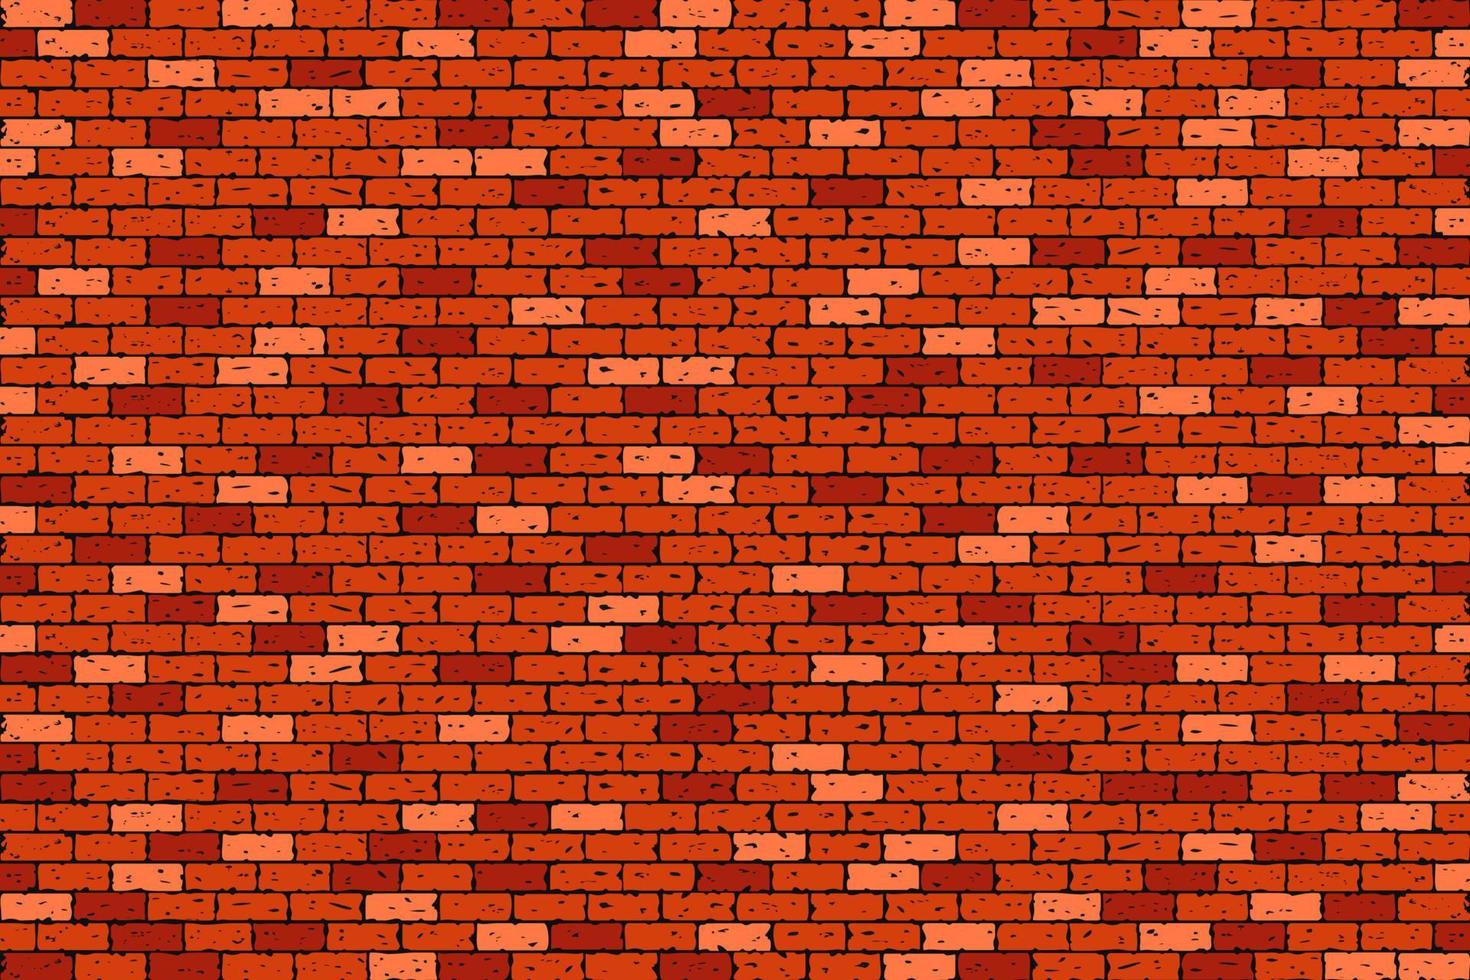 Brick wall texture pattern vector design illustration